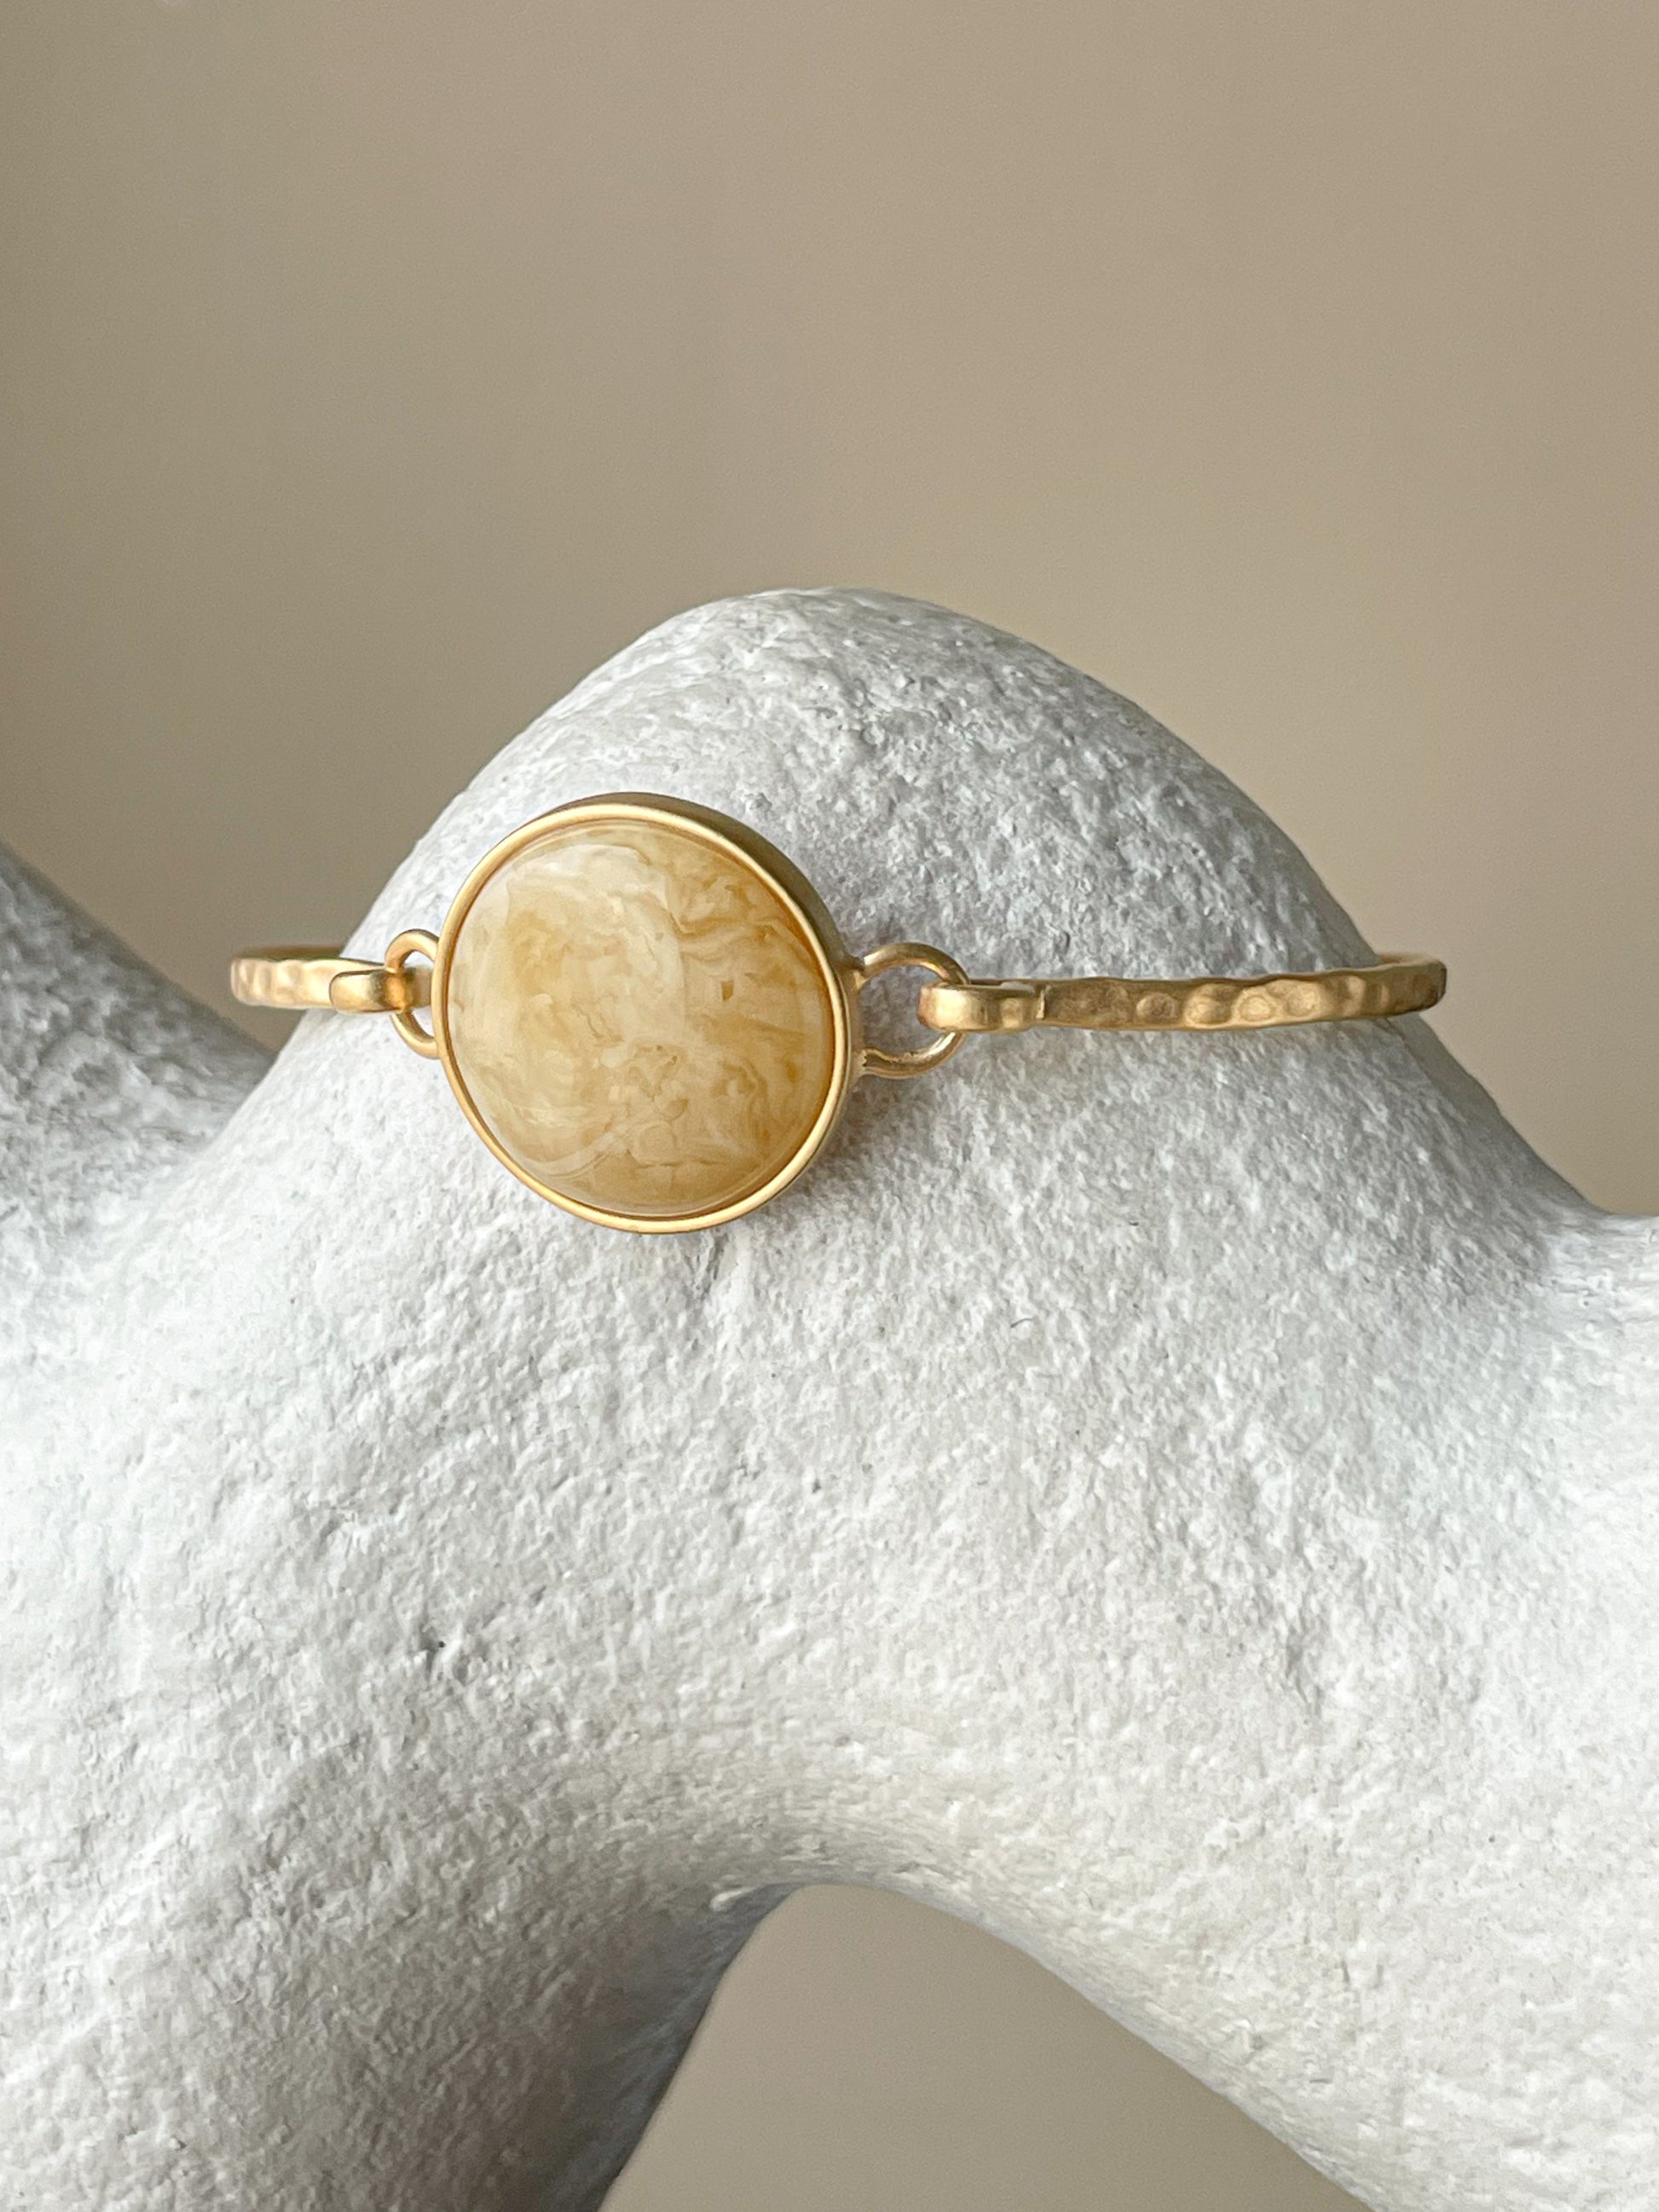 Amber bracelet - Gold plated silver - Bangle bracelet collection